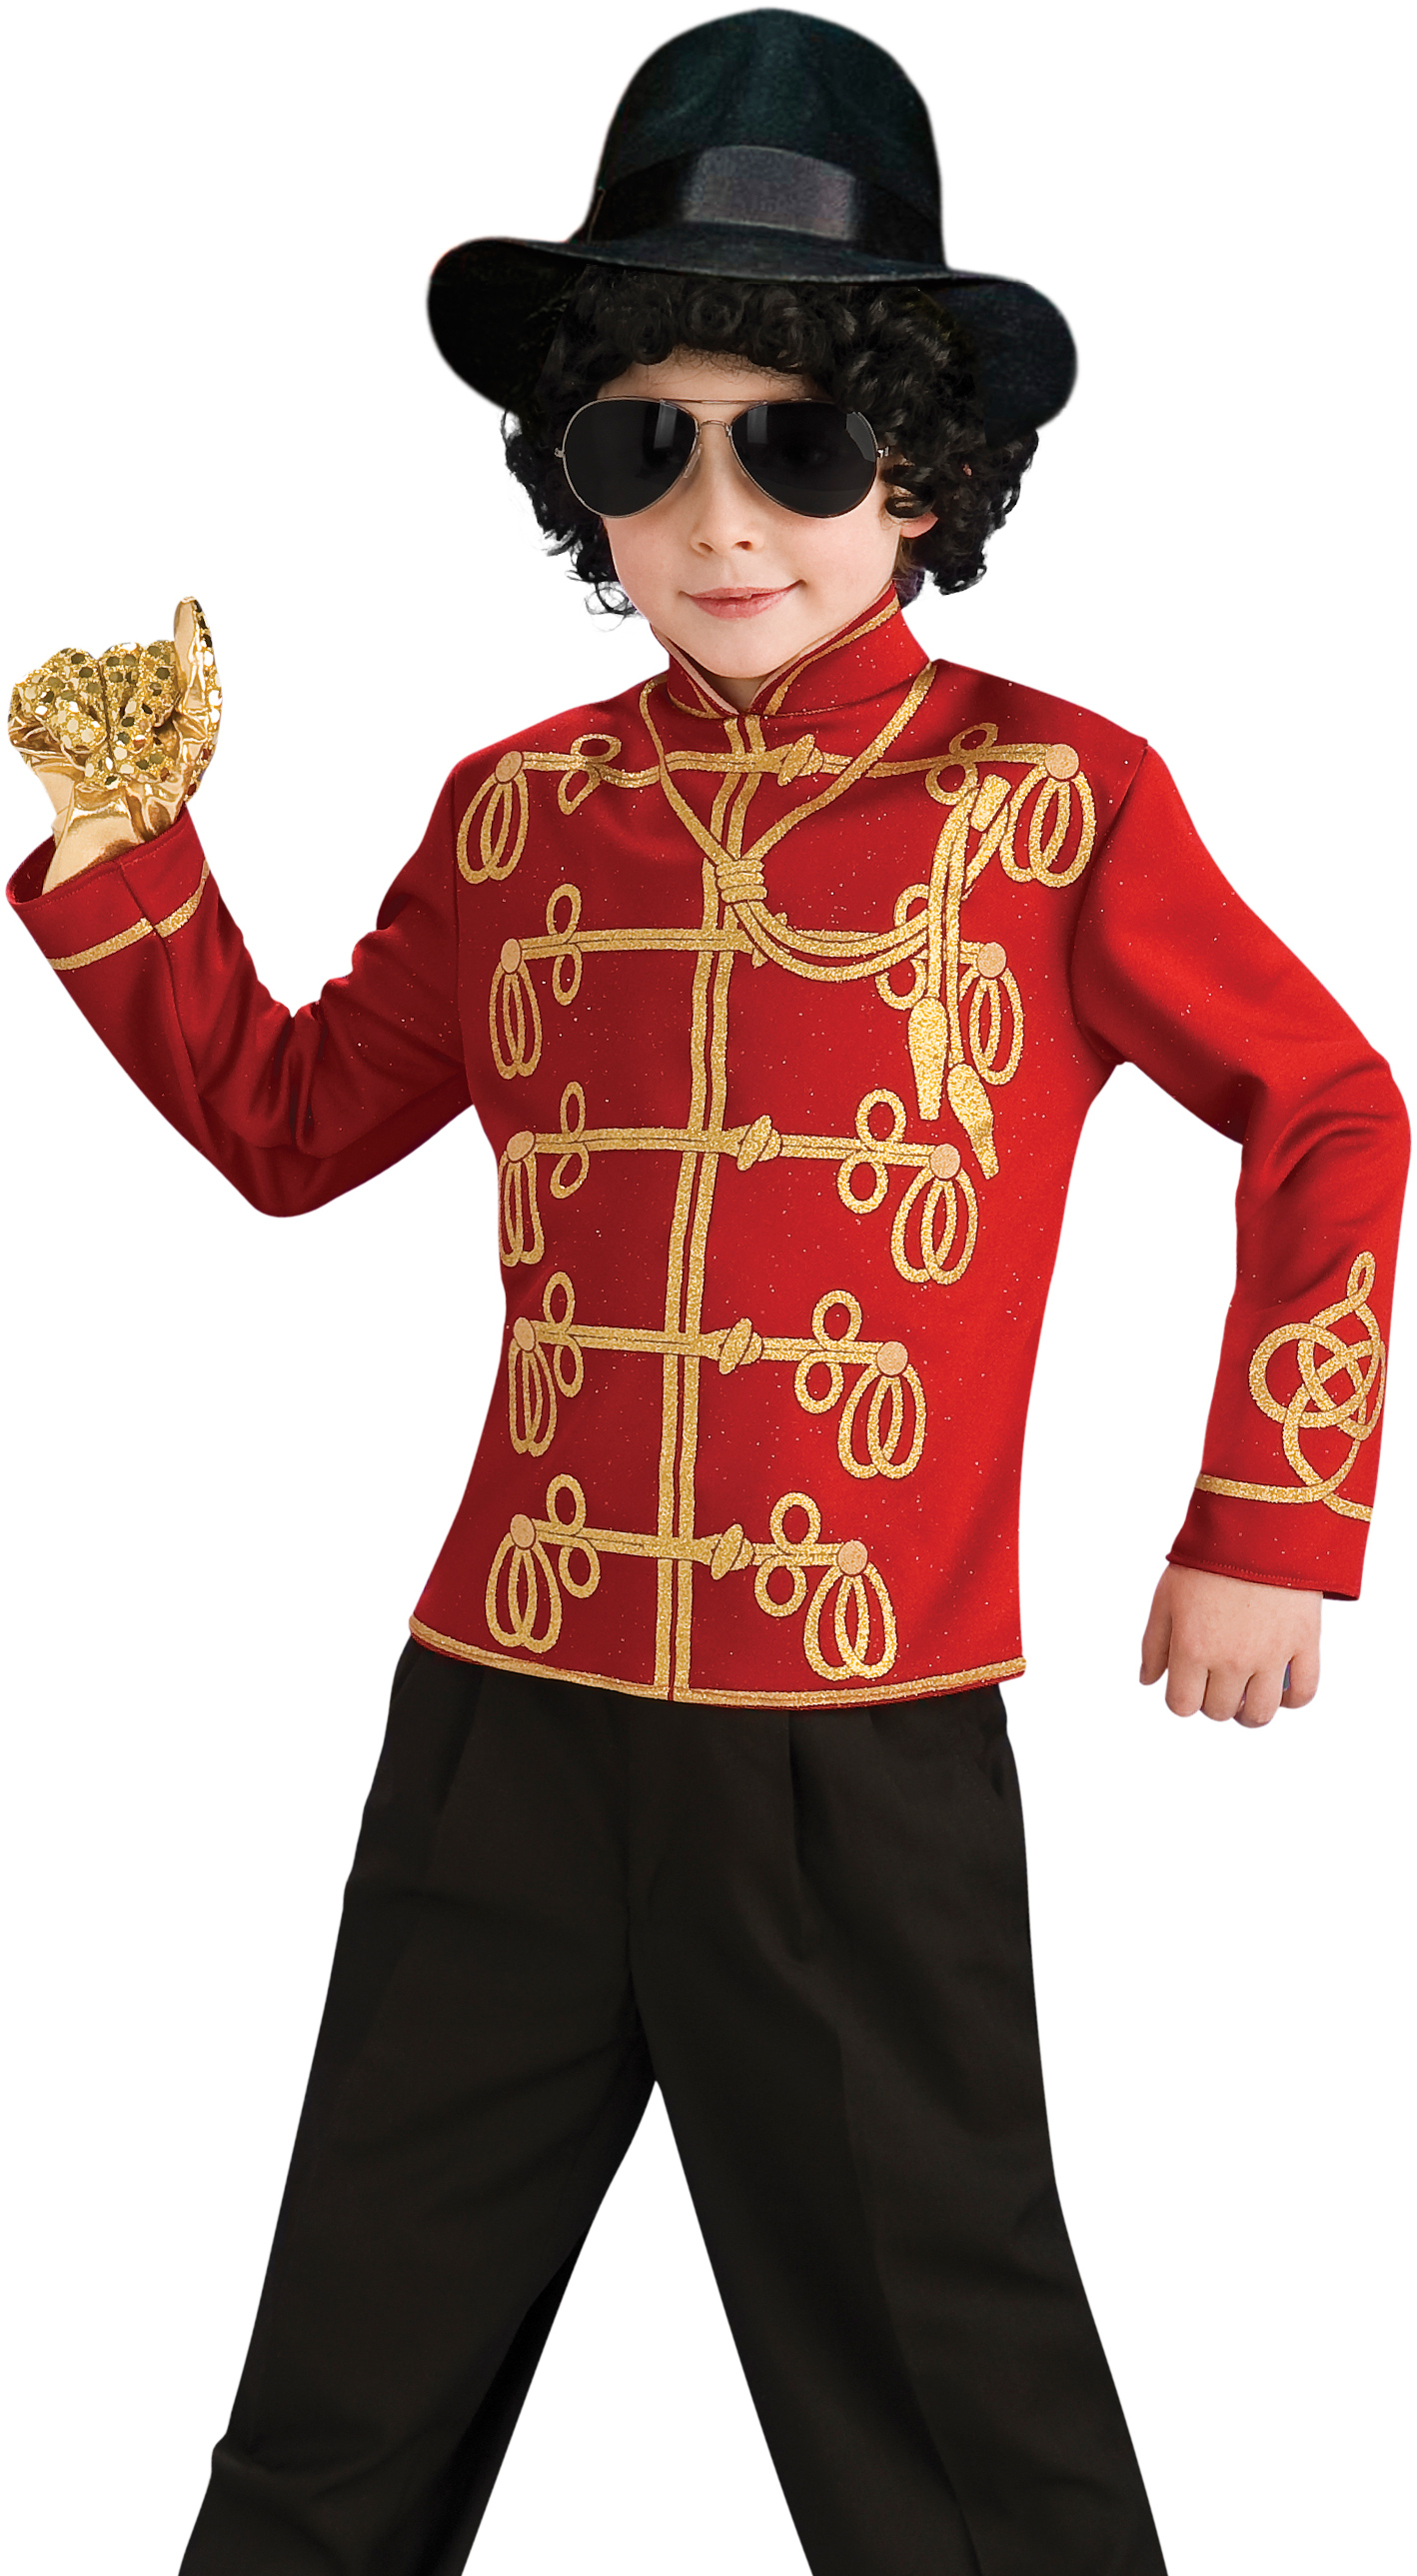 michael jackson costume ireland